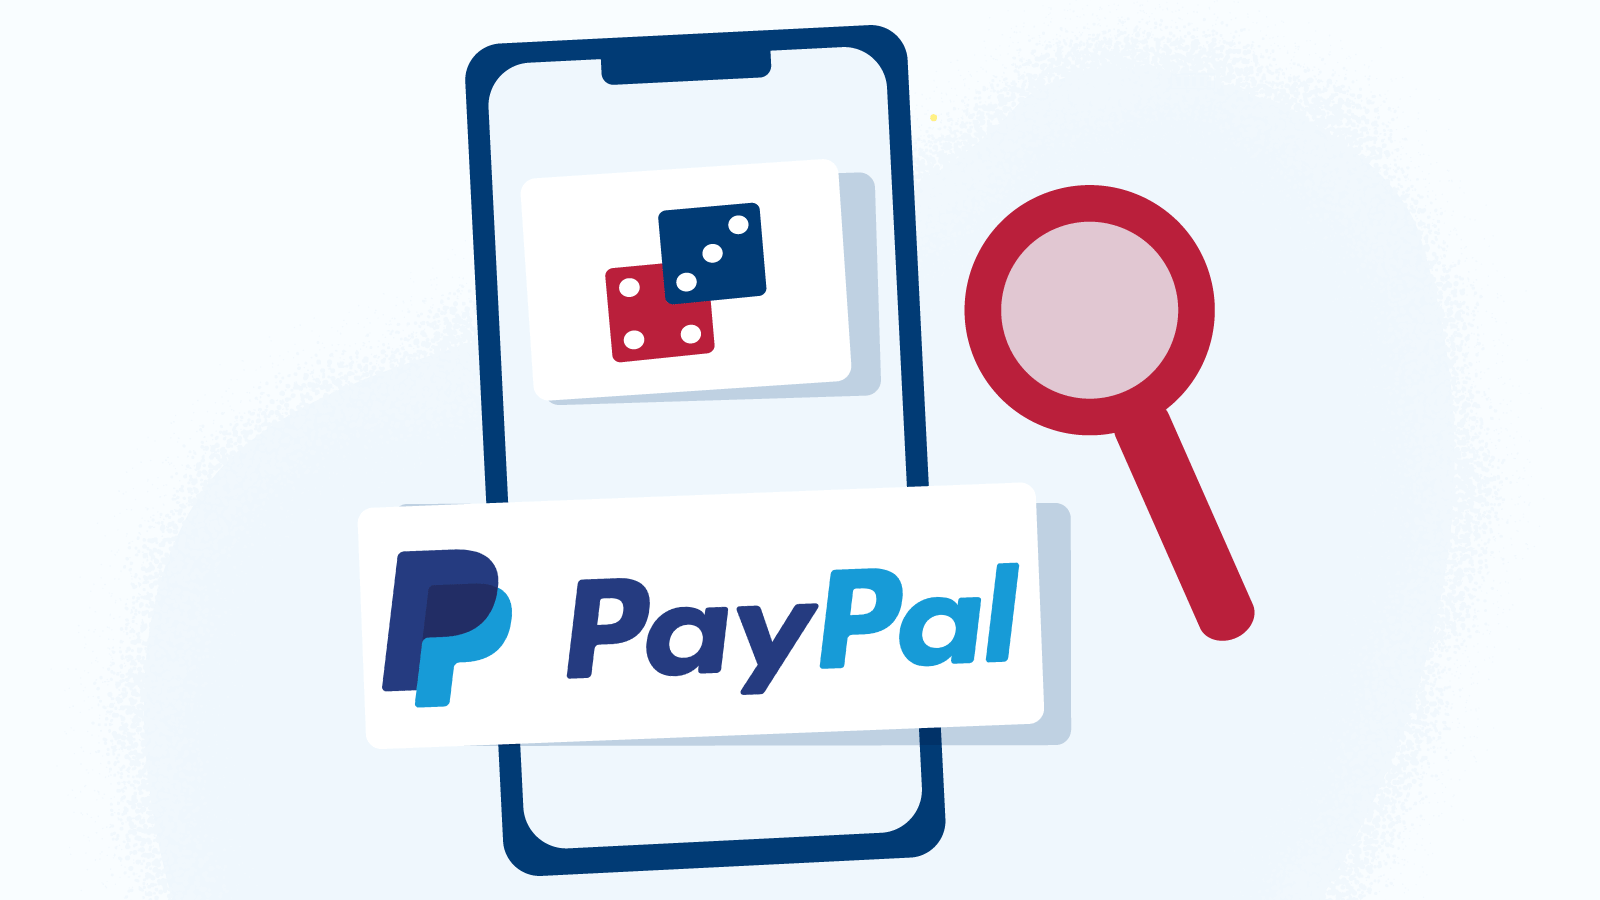 PayPal Walkthrough and Benefits